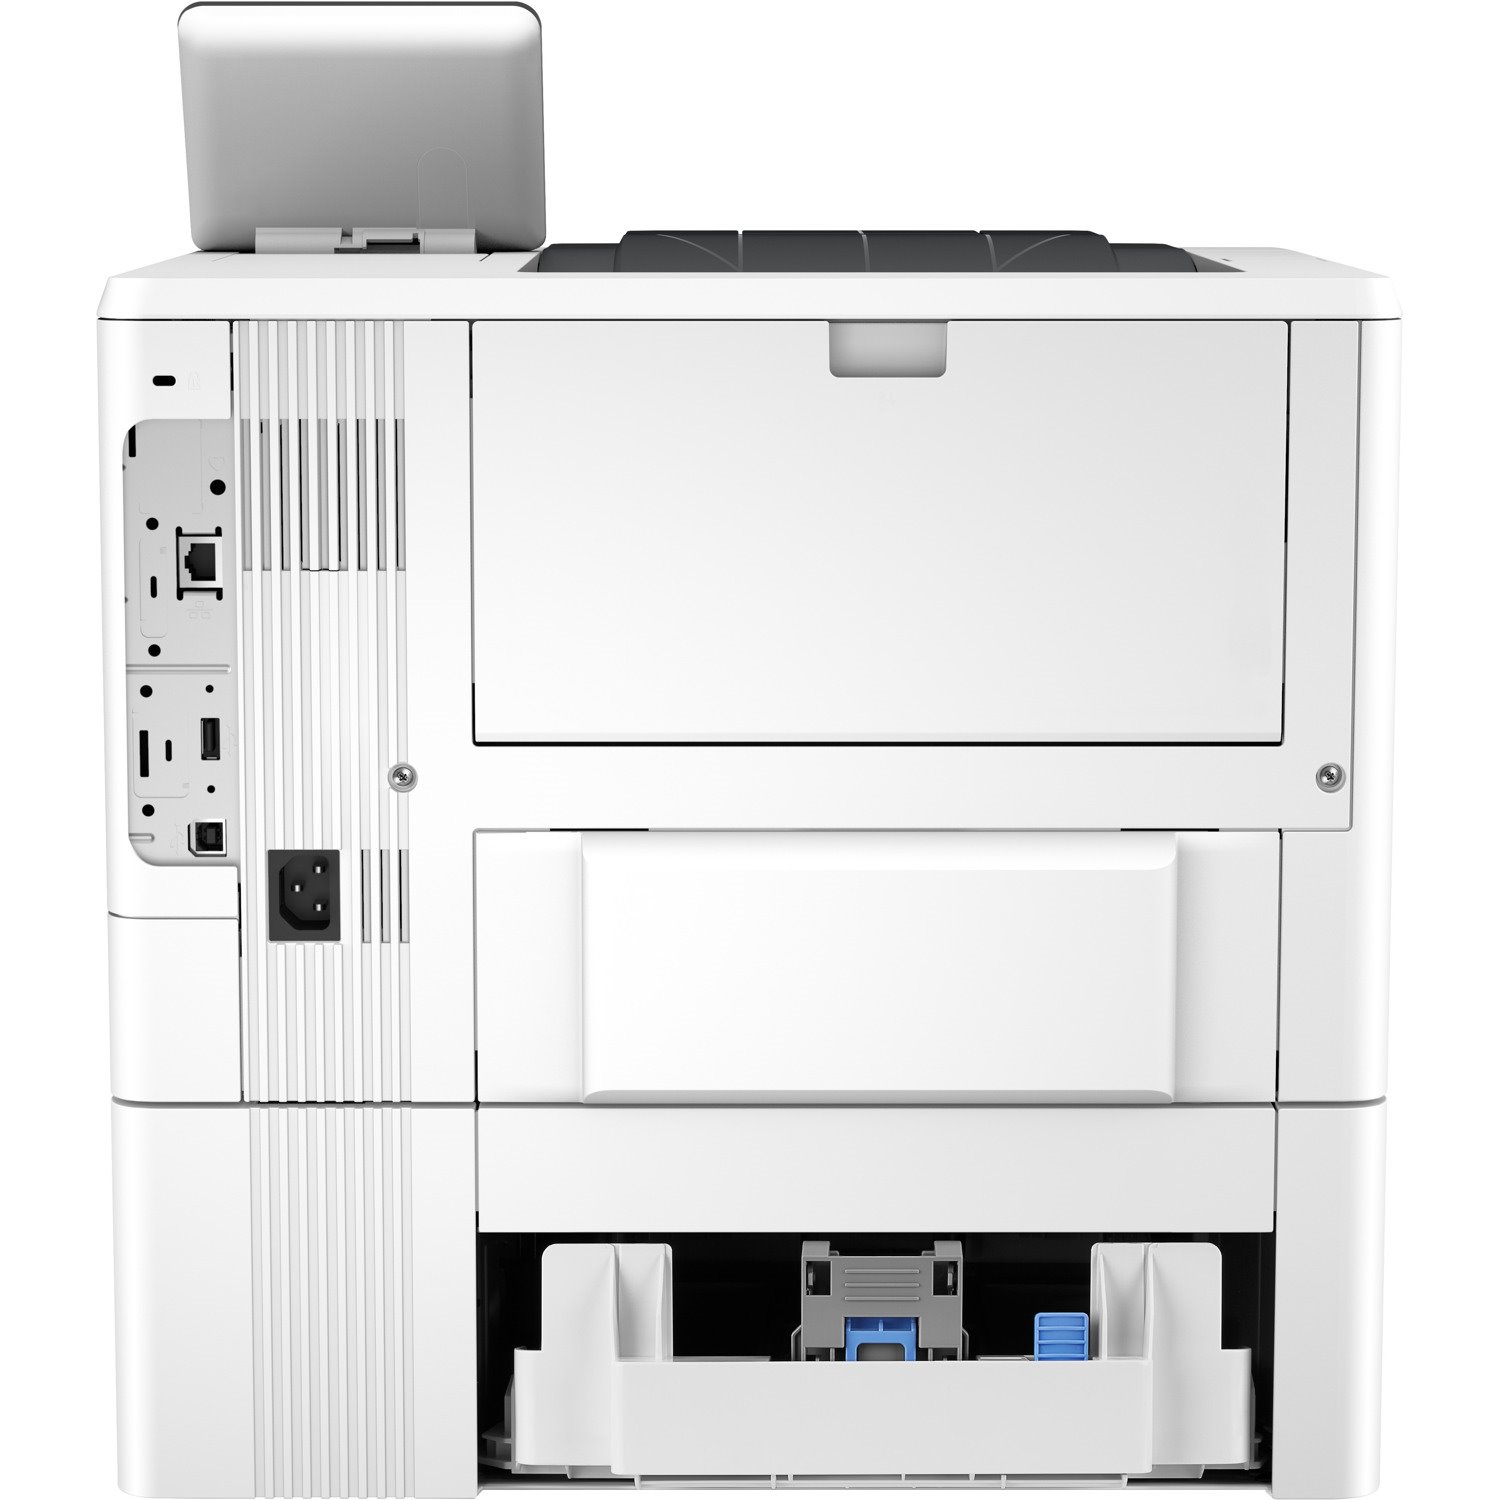 HP LaserJet M506x Desktop Laser Printer